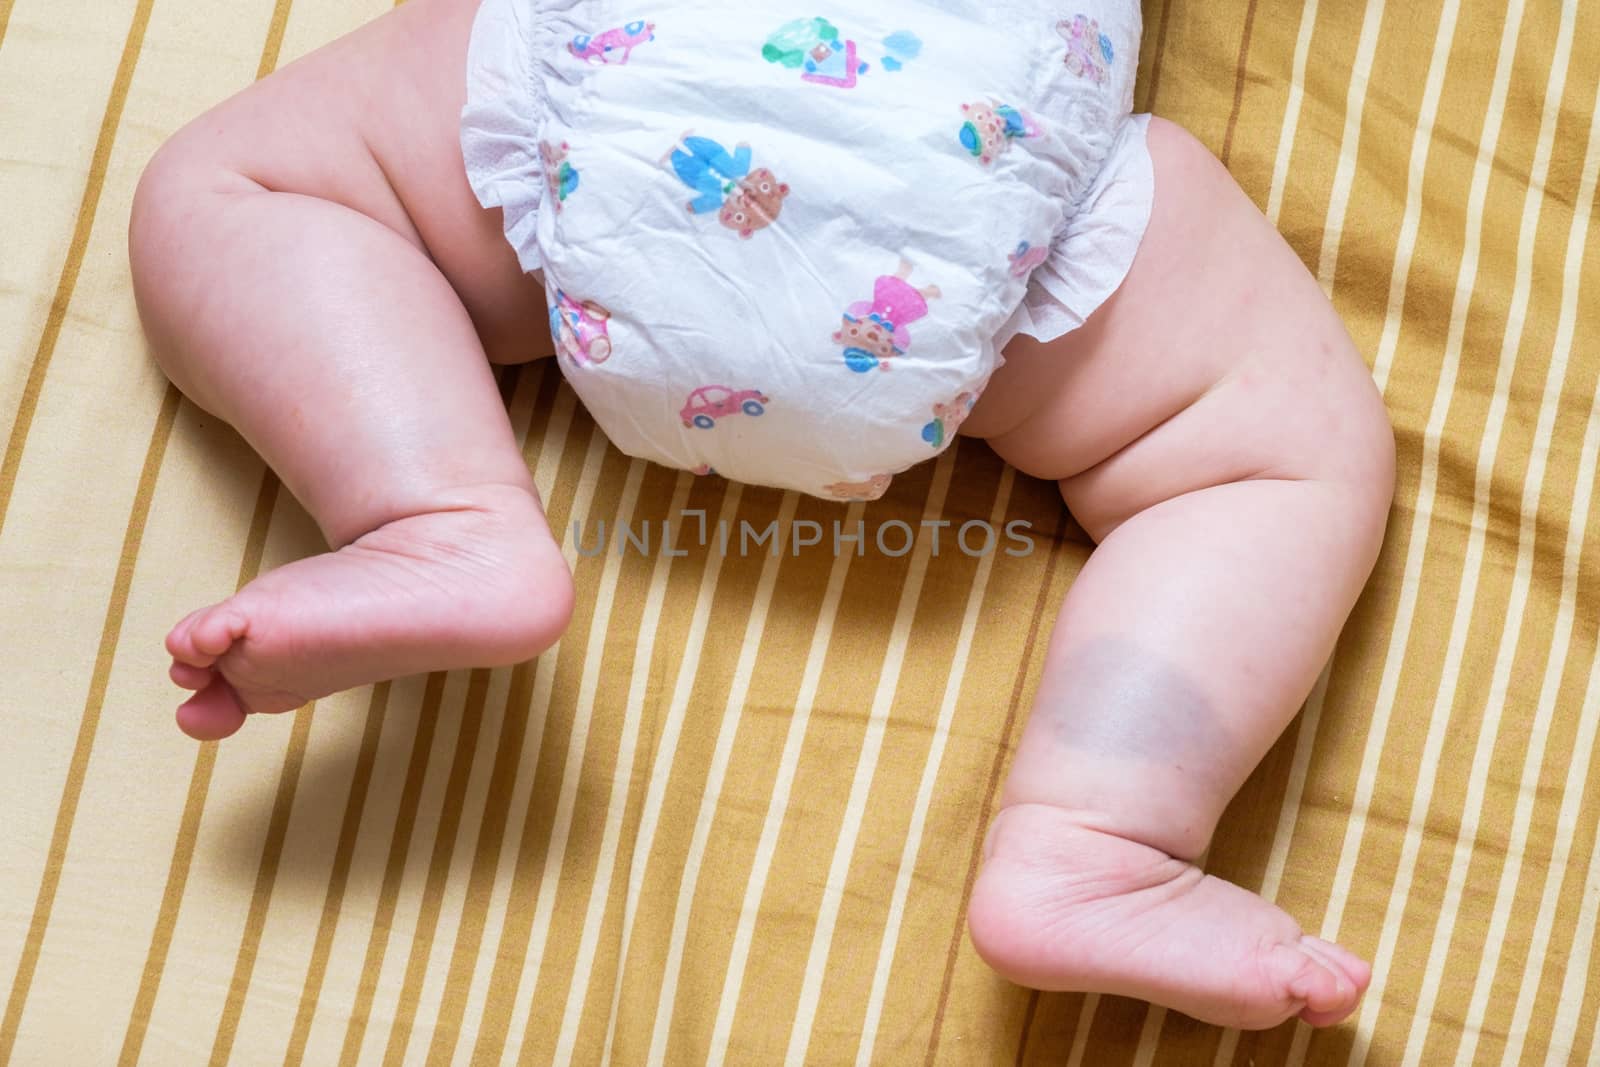 Birthmark on Asian baby girl legs by zneb076